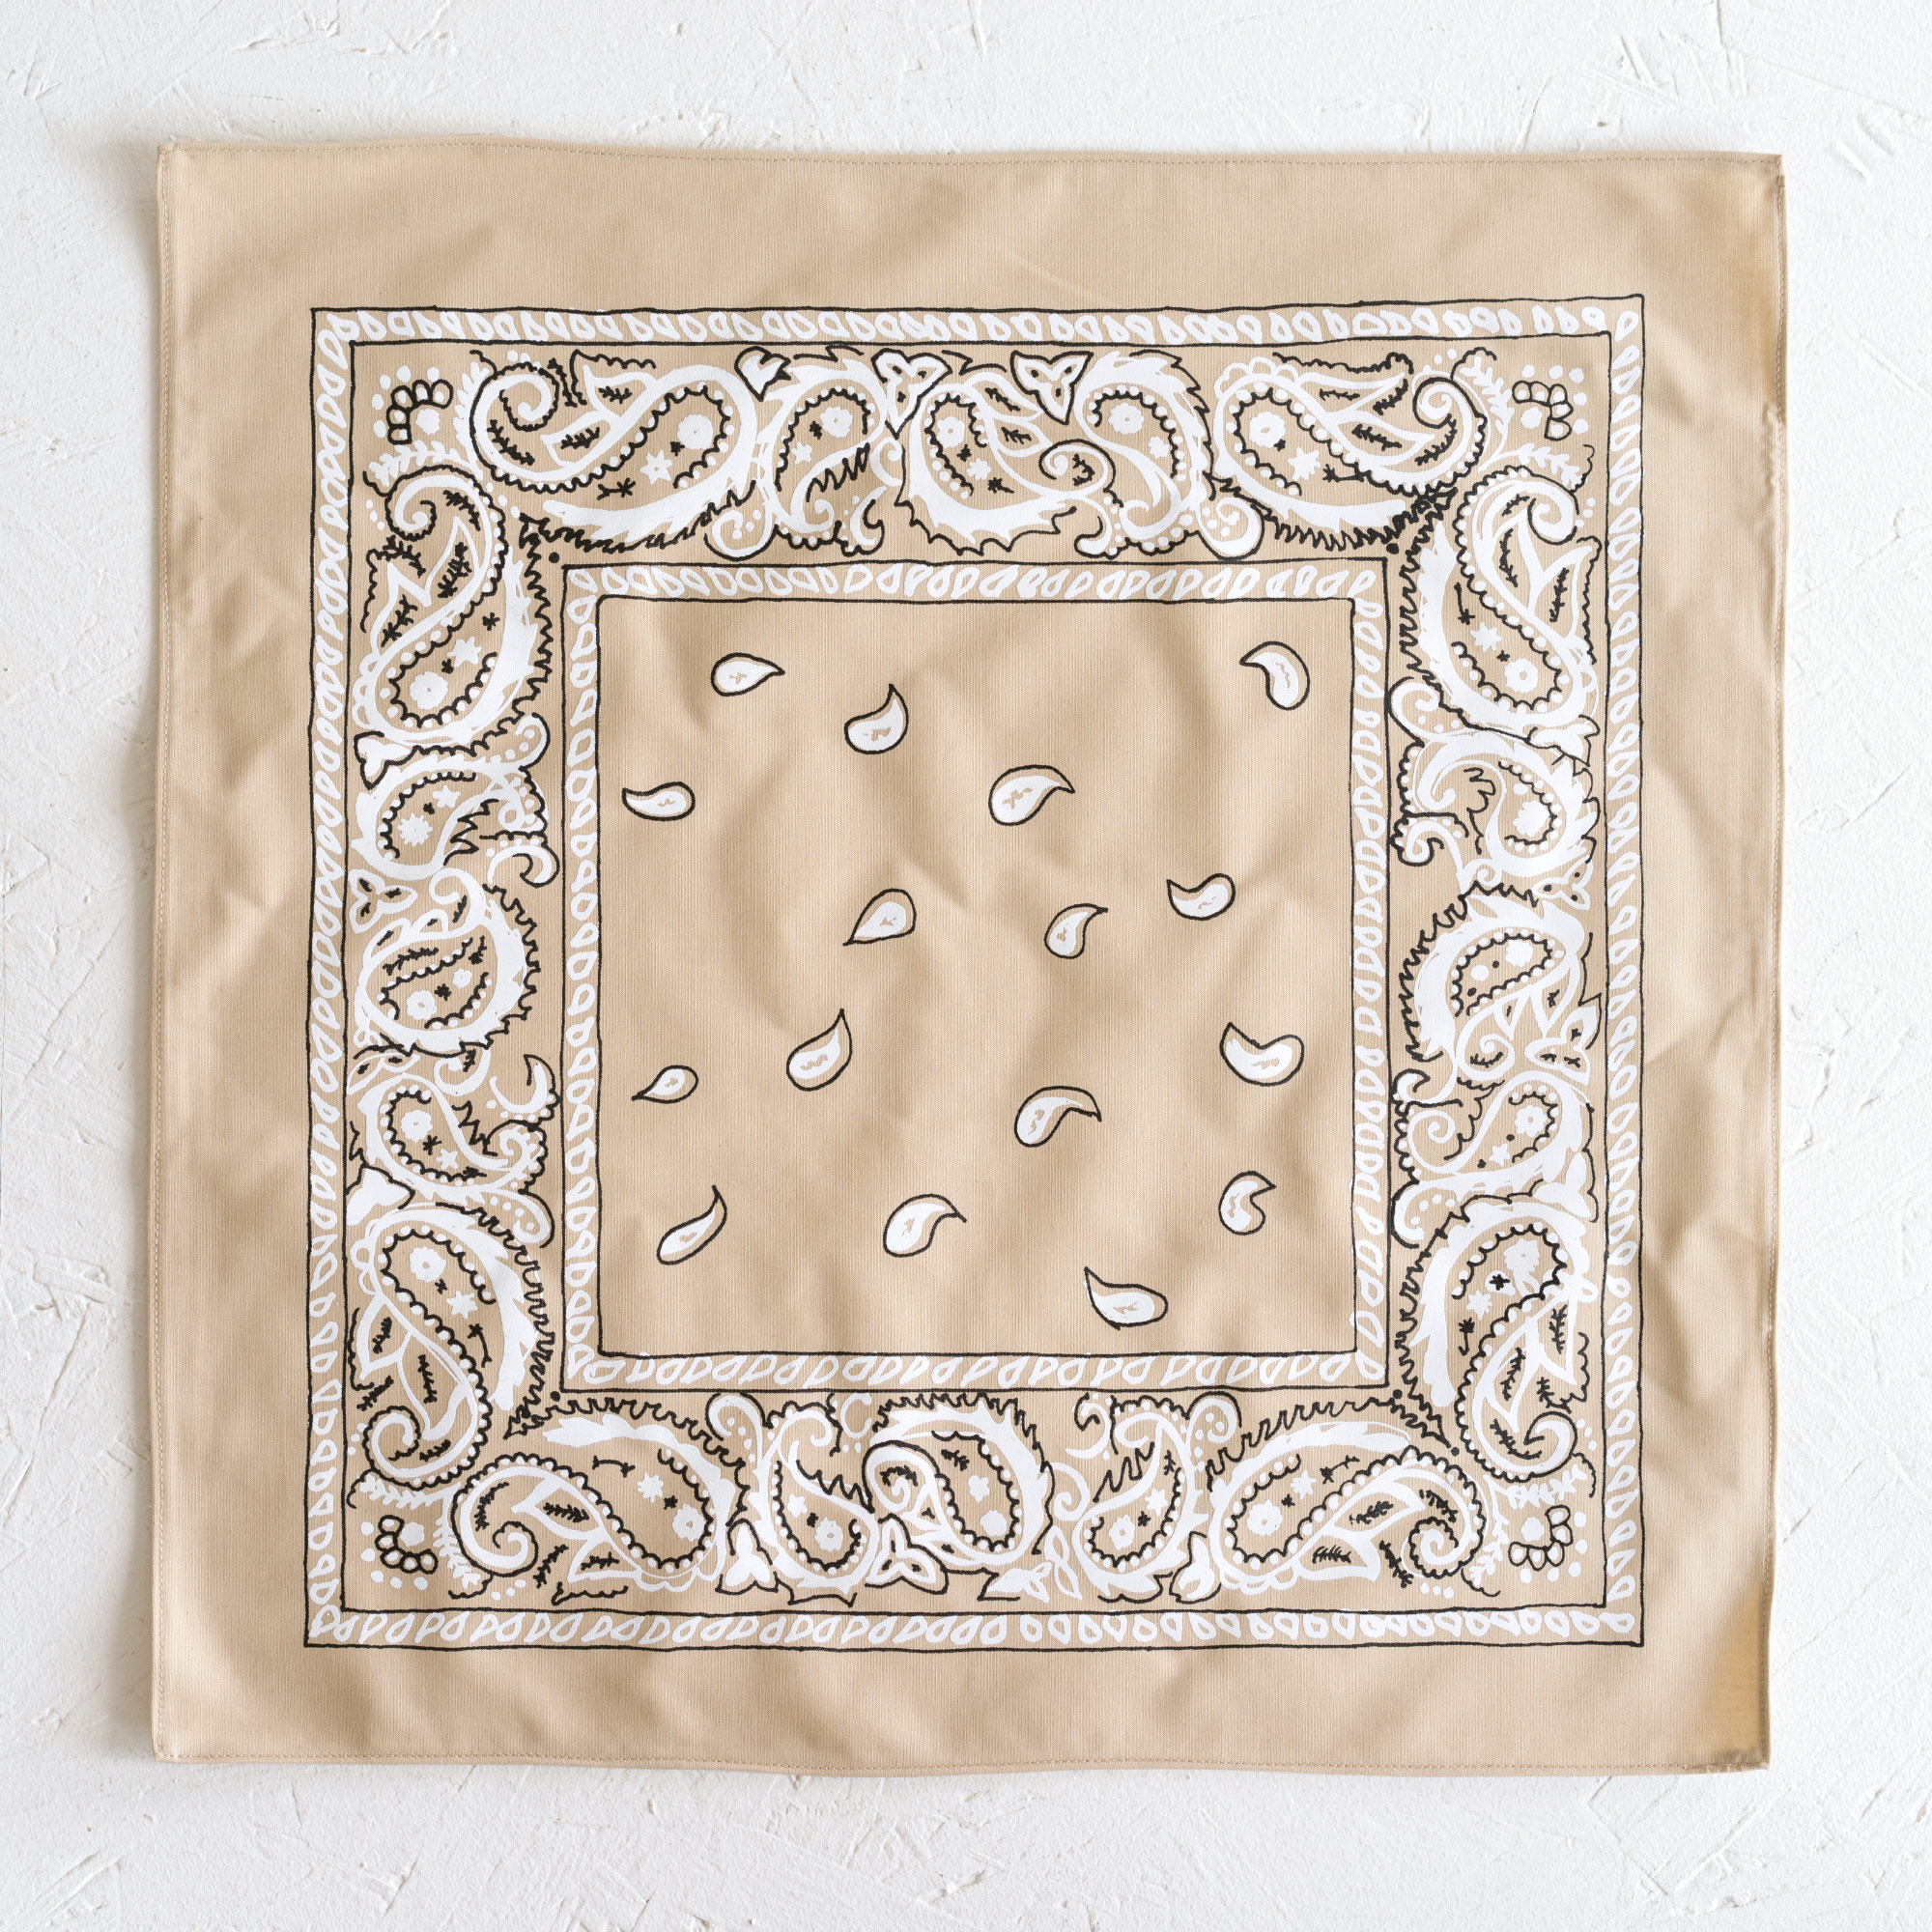 Nancy Davidson, *Hanky Code* (Beige), 2016, Two color silkscreen on hand cut & sewn cotton, 17 x 17 inches (43.18 x 43.18 cm)